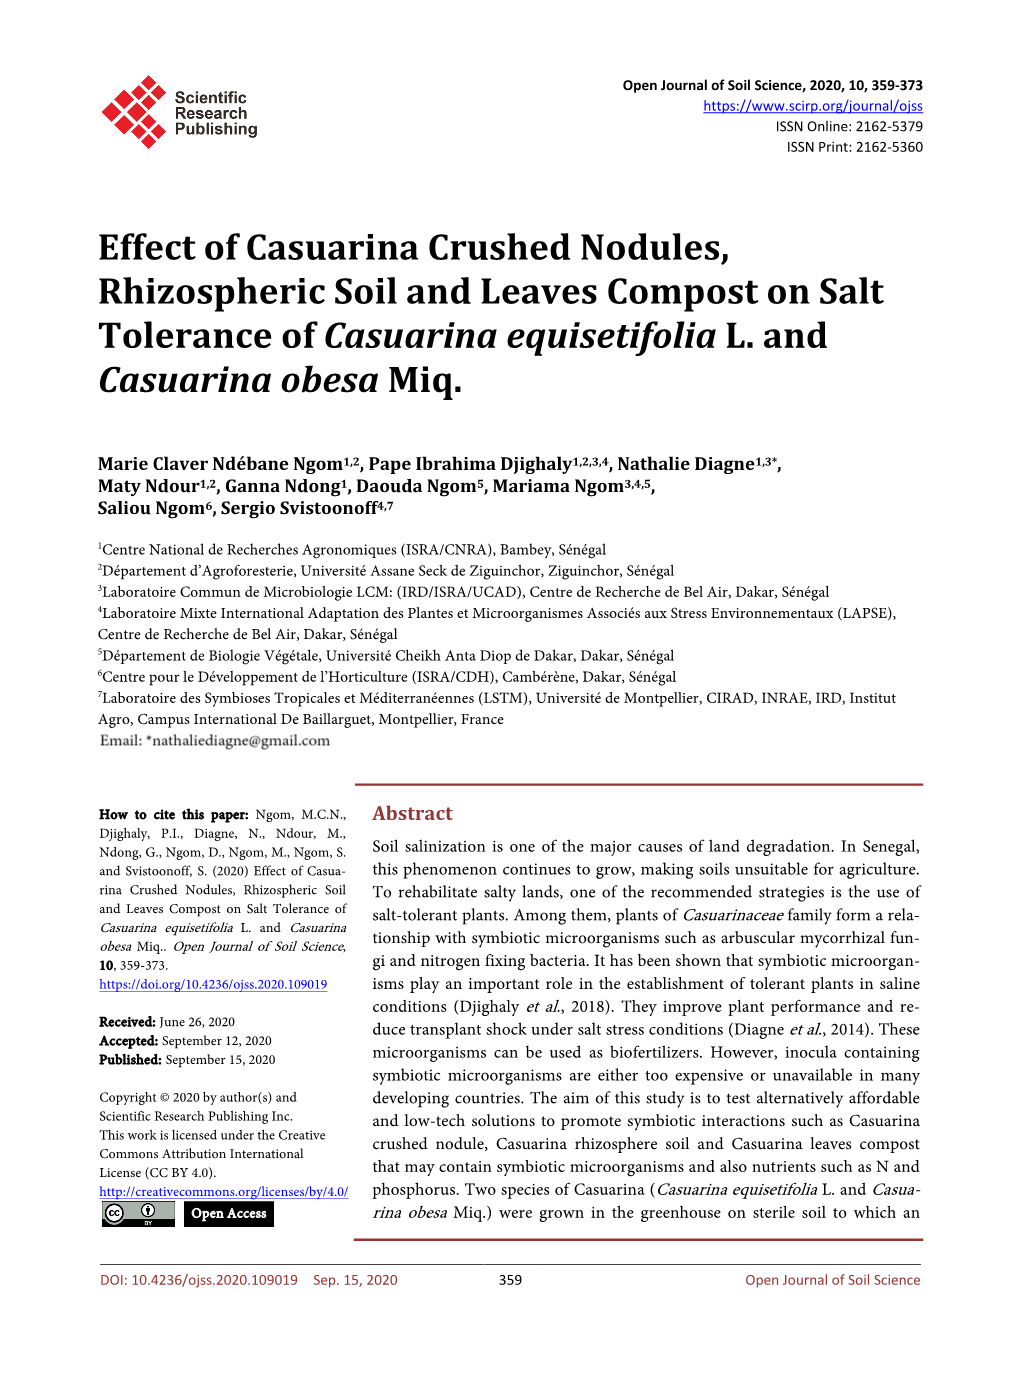 Effect of Casuarina Crushed Nodules, Rhizospheric Soil and Leaves Compost on Salt Tolerance of Casuarina Equisetifolia L